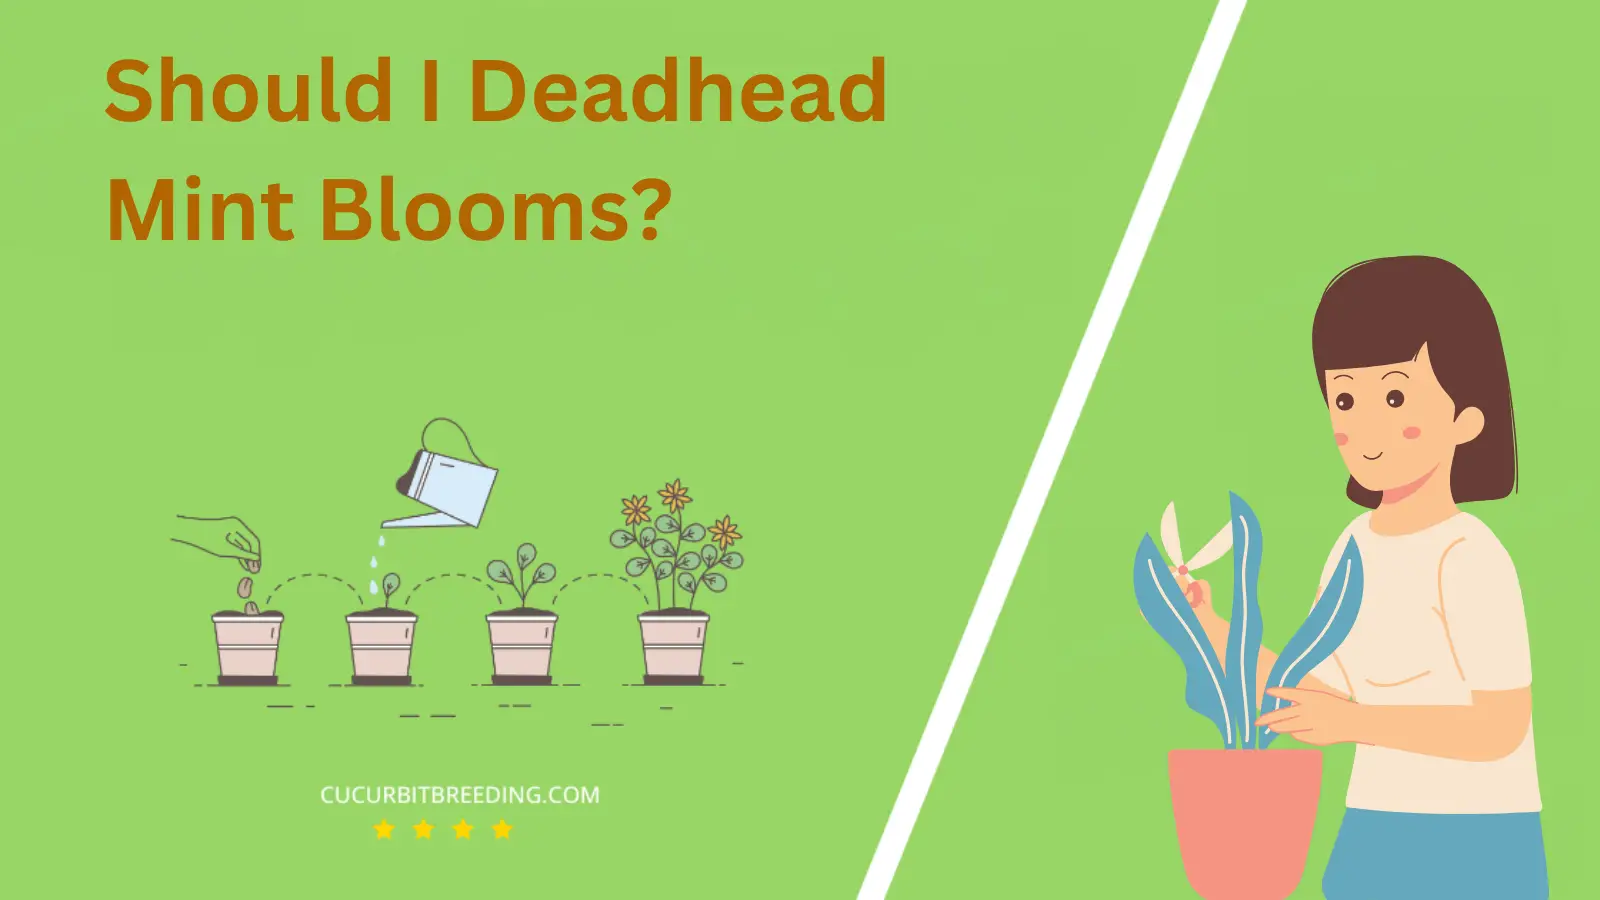 Should I Deadhead Mint Blooms?